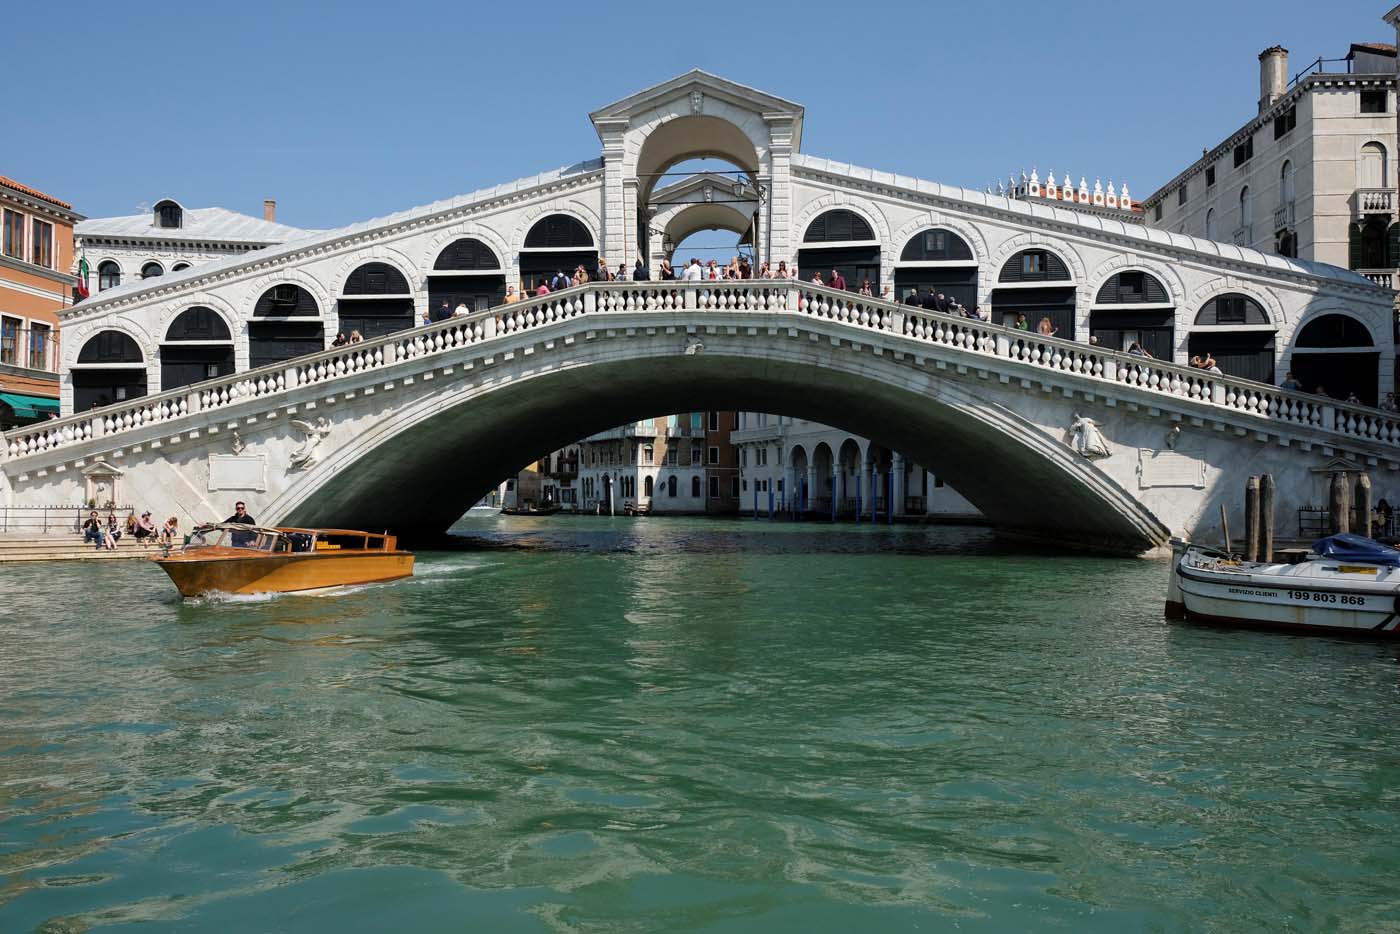 The Rialto Bridge is seen in Venice, Italy March 30, 2017. REUTERS/Manuel Silvestri